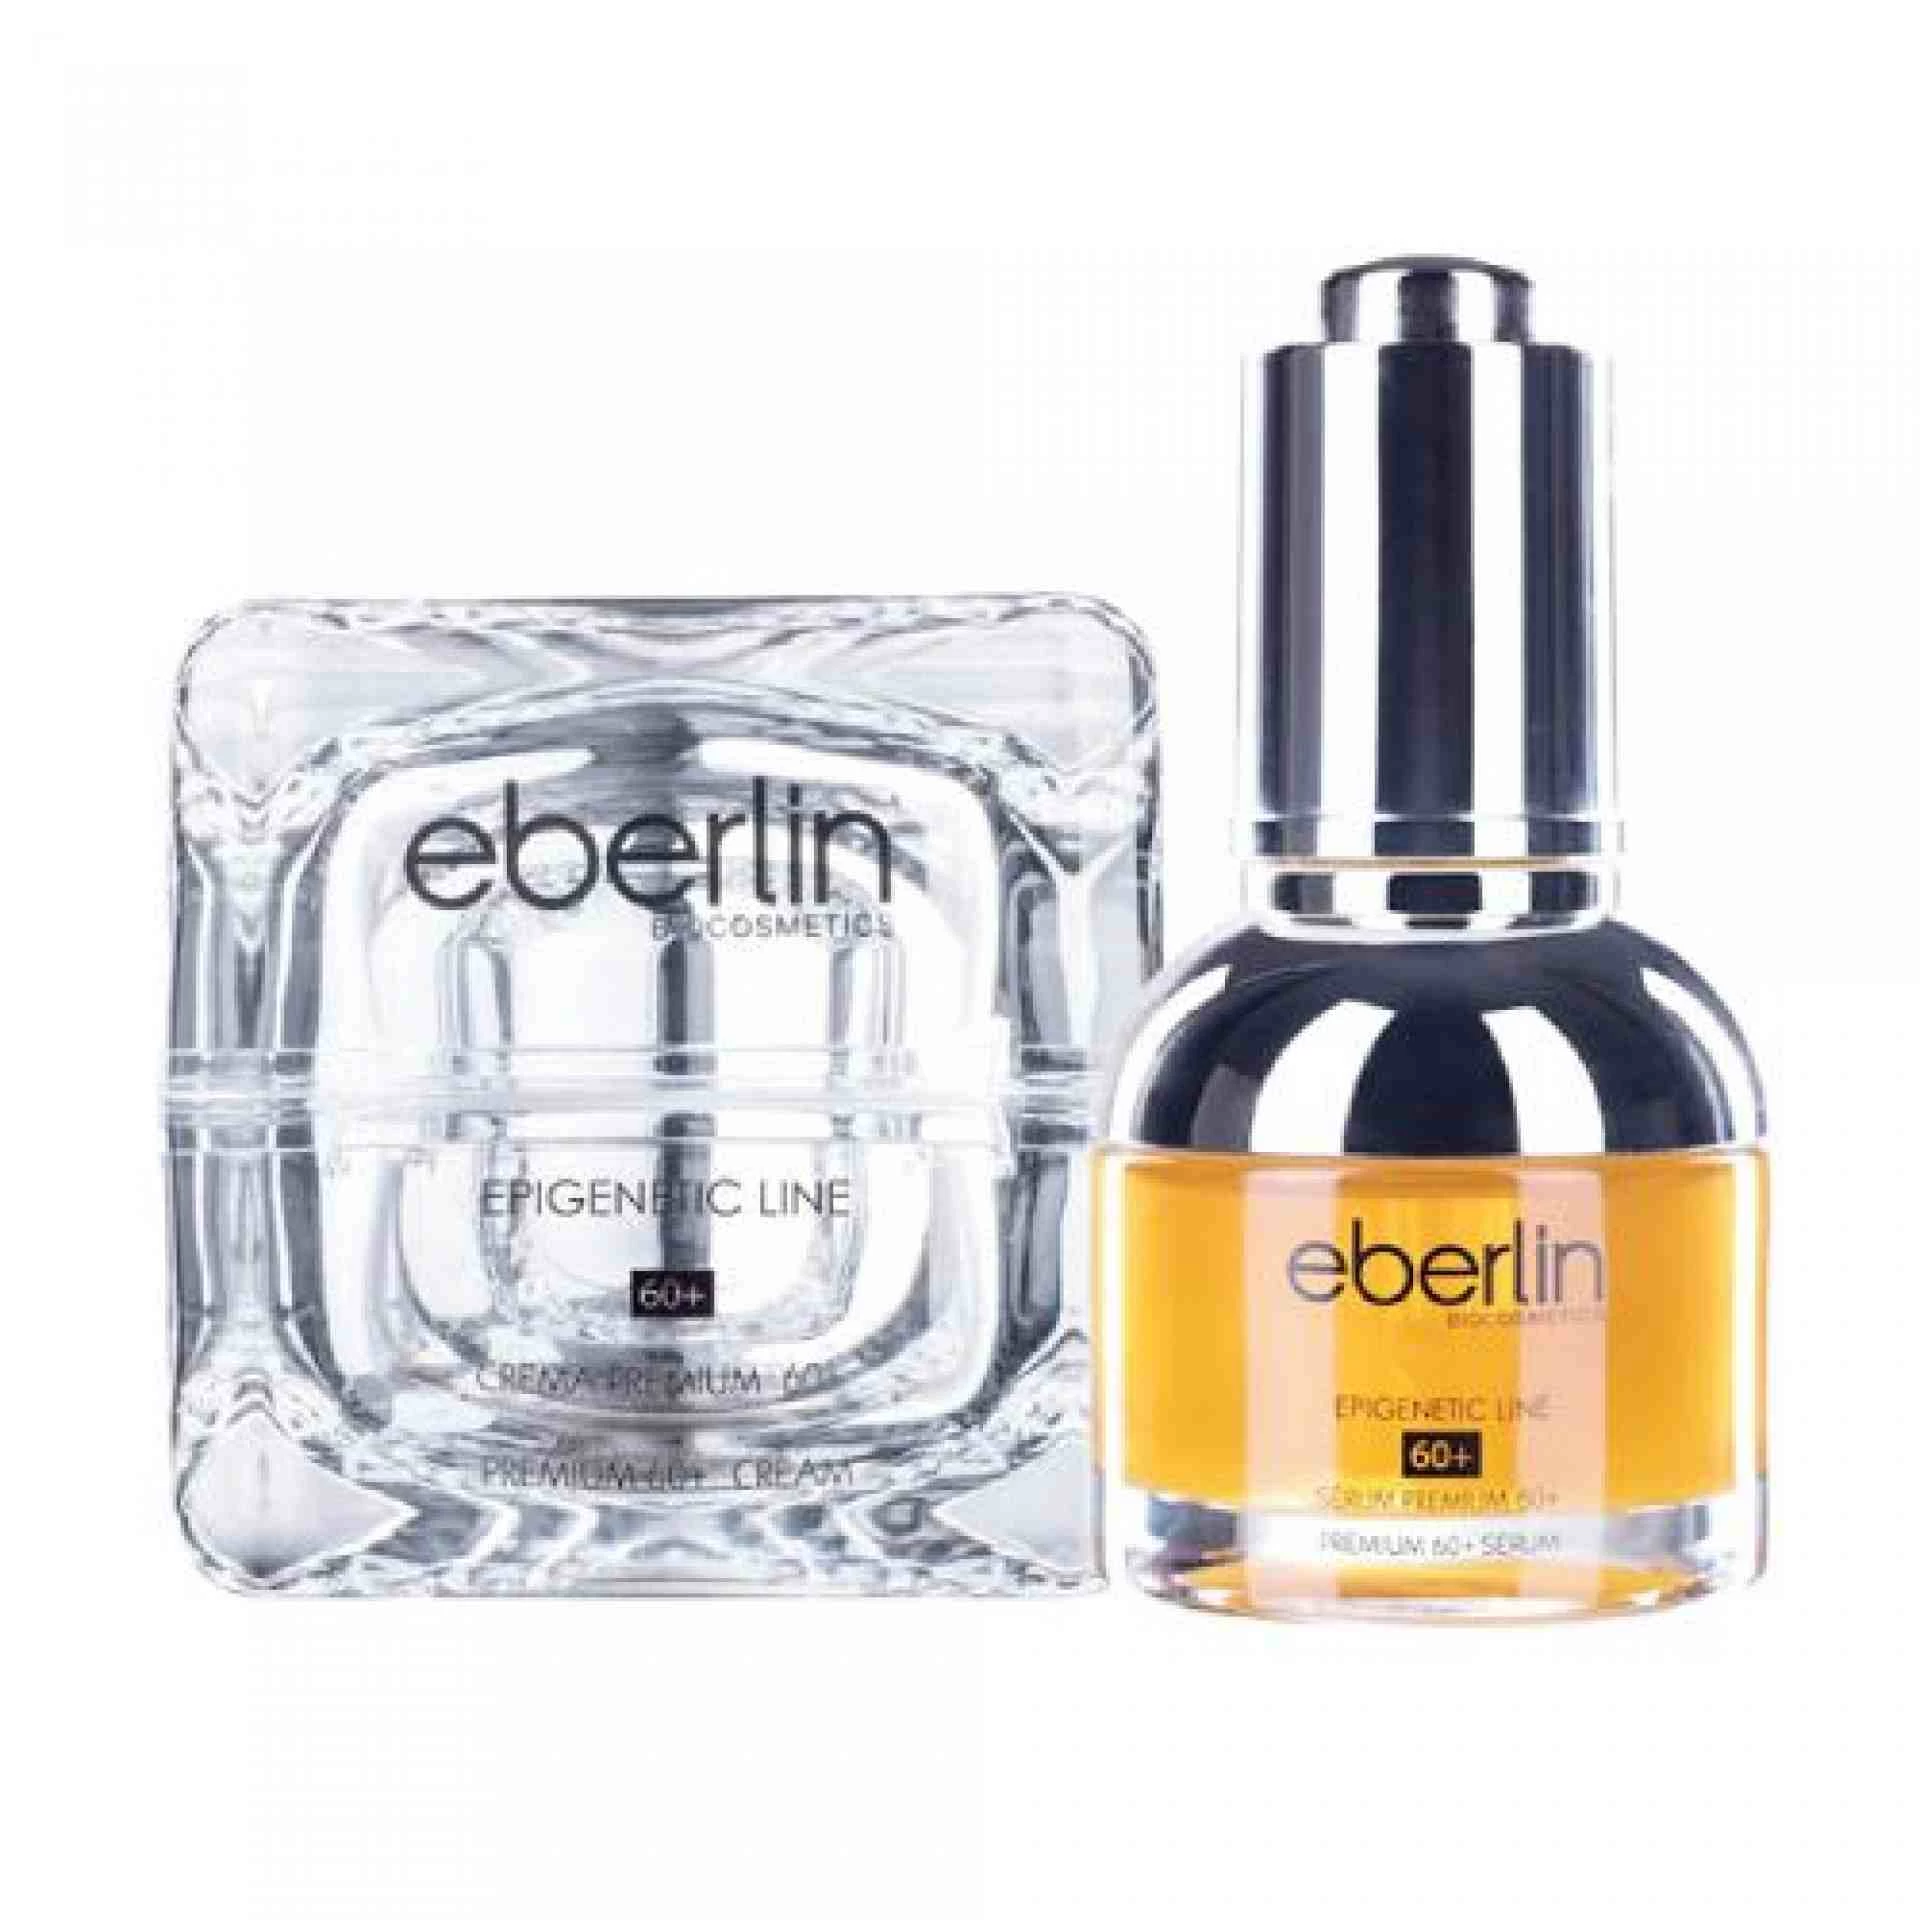 Estuche Premium 60+ | Crema 50ml + Serum 30ml - Línea Epigenética - Eberlin ®